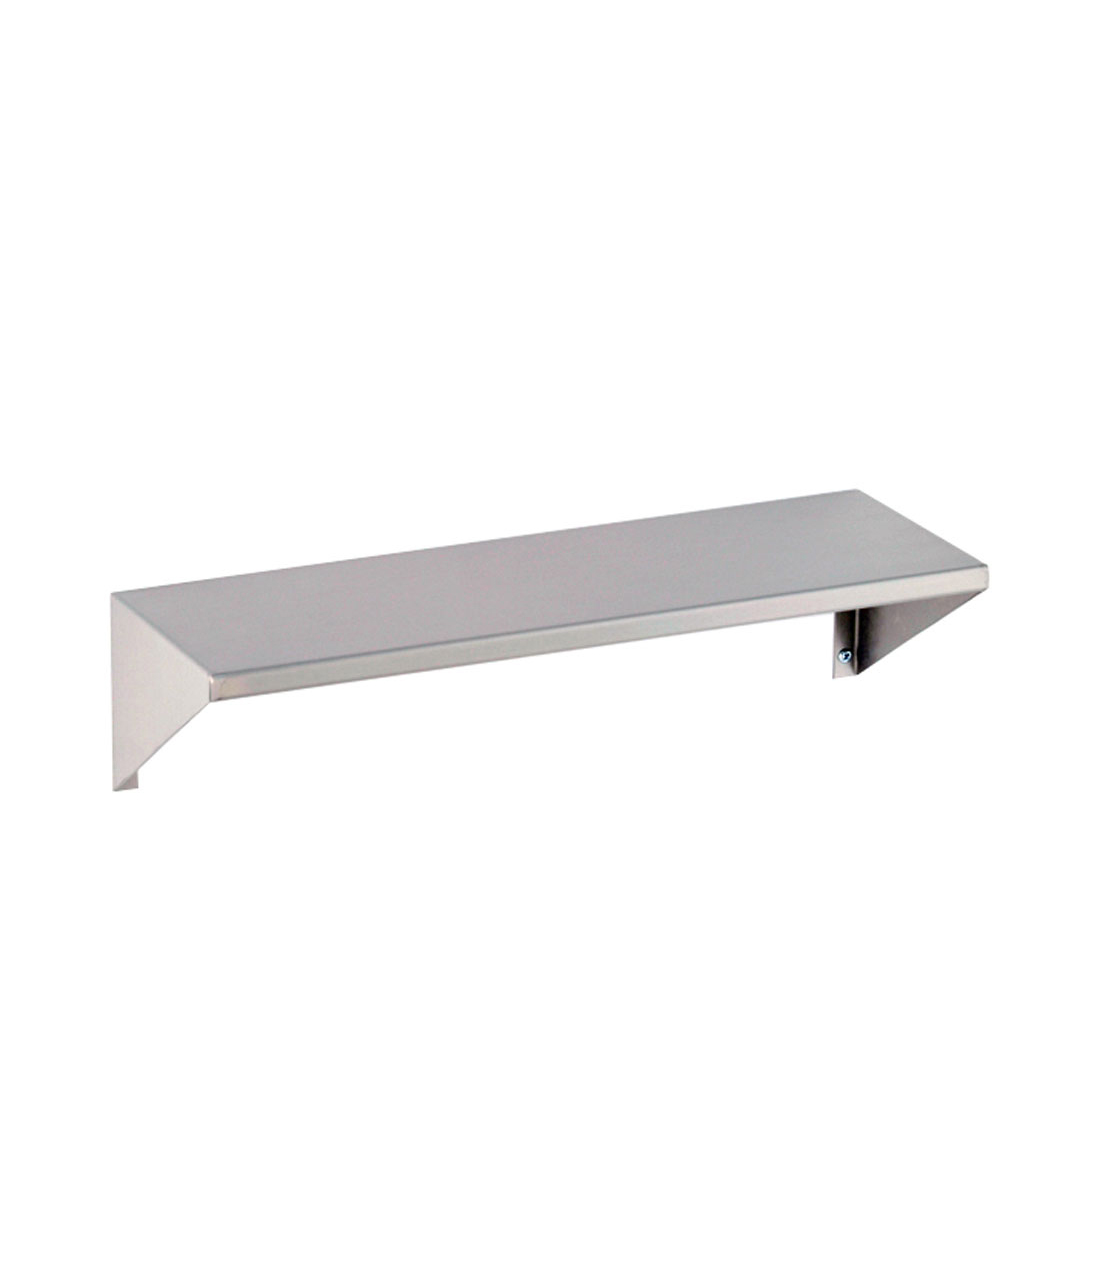 Stainless Steel Shelf - (Model #: s-6-series)-image